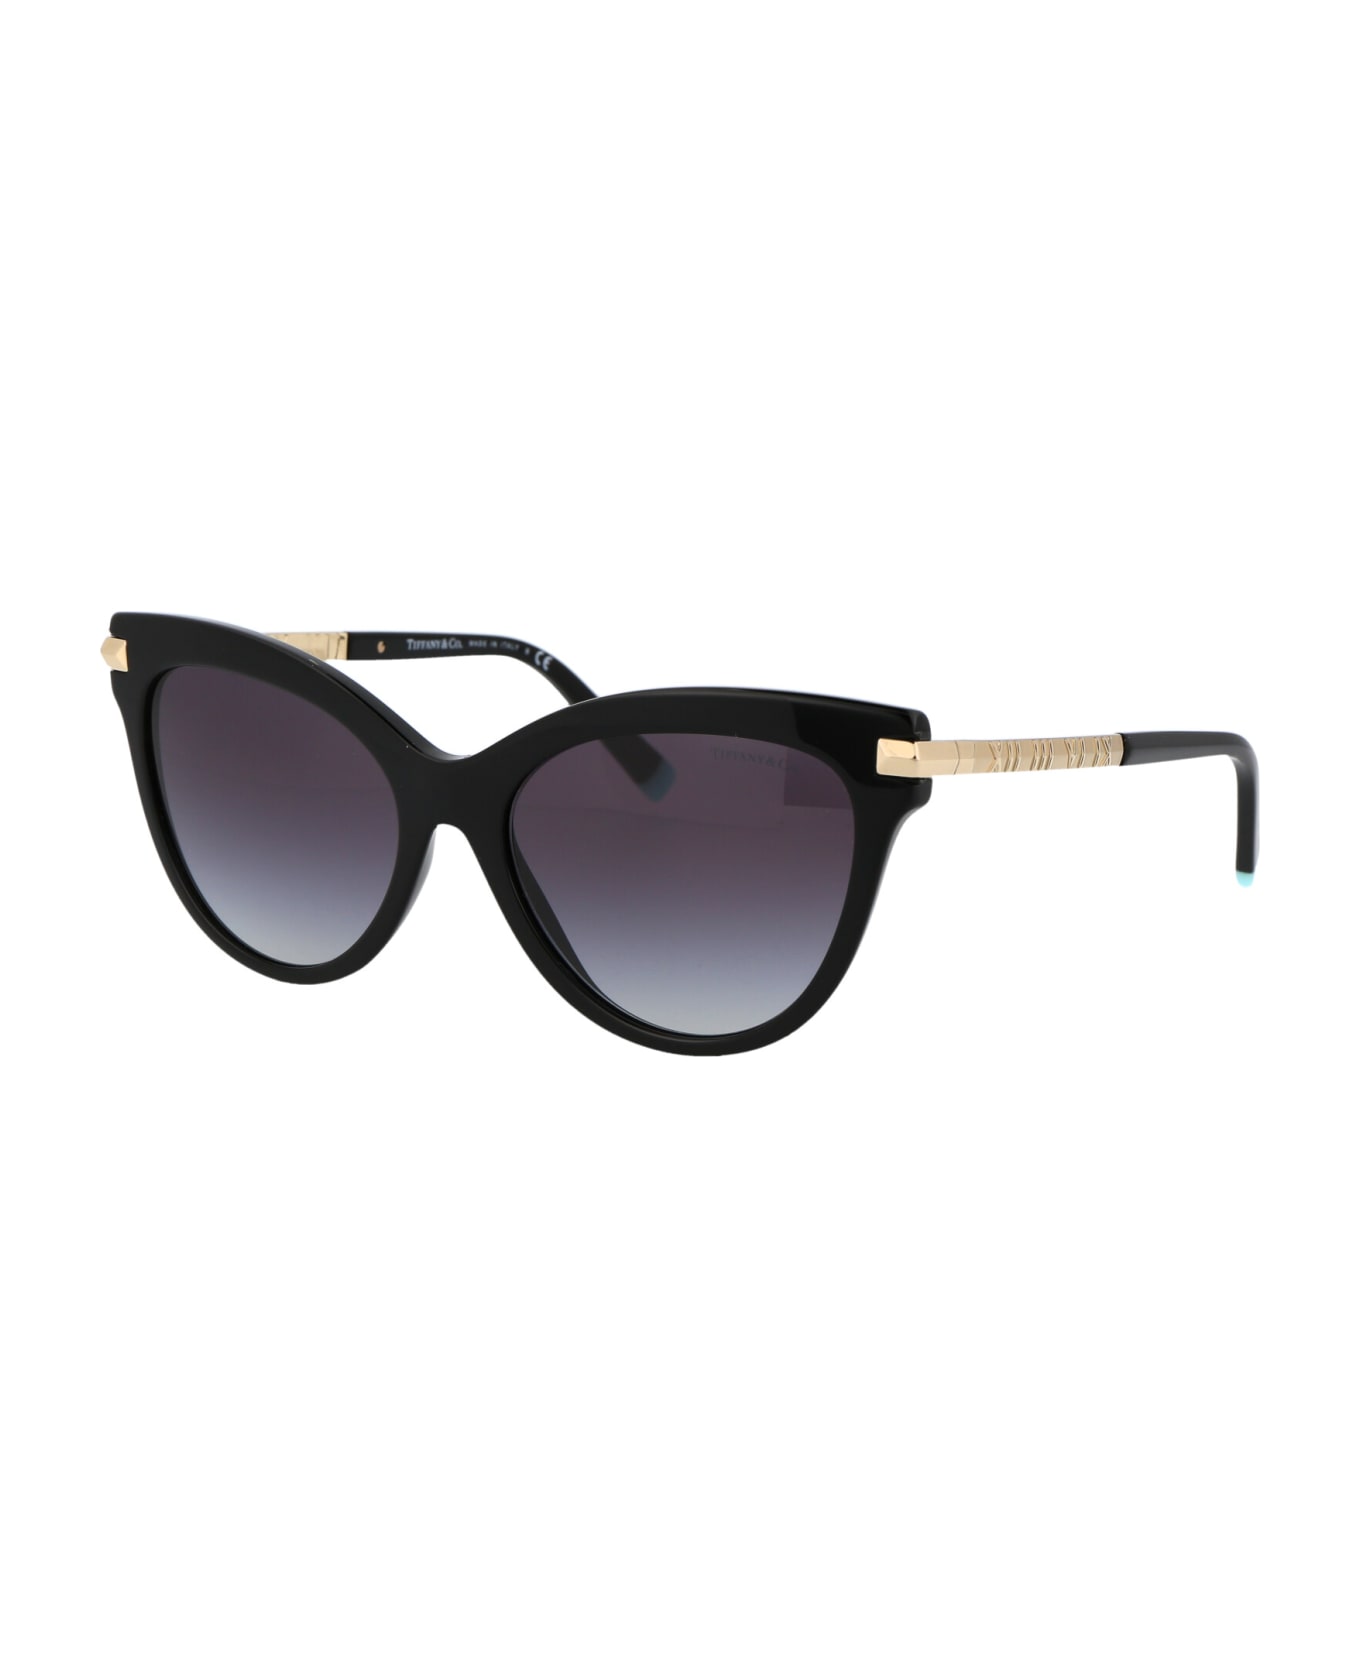 Tiffany & Co. 0tf4182 Sunglasses - 80013C Black